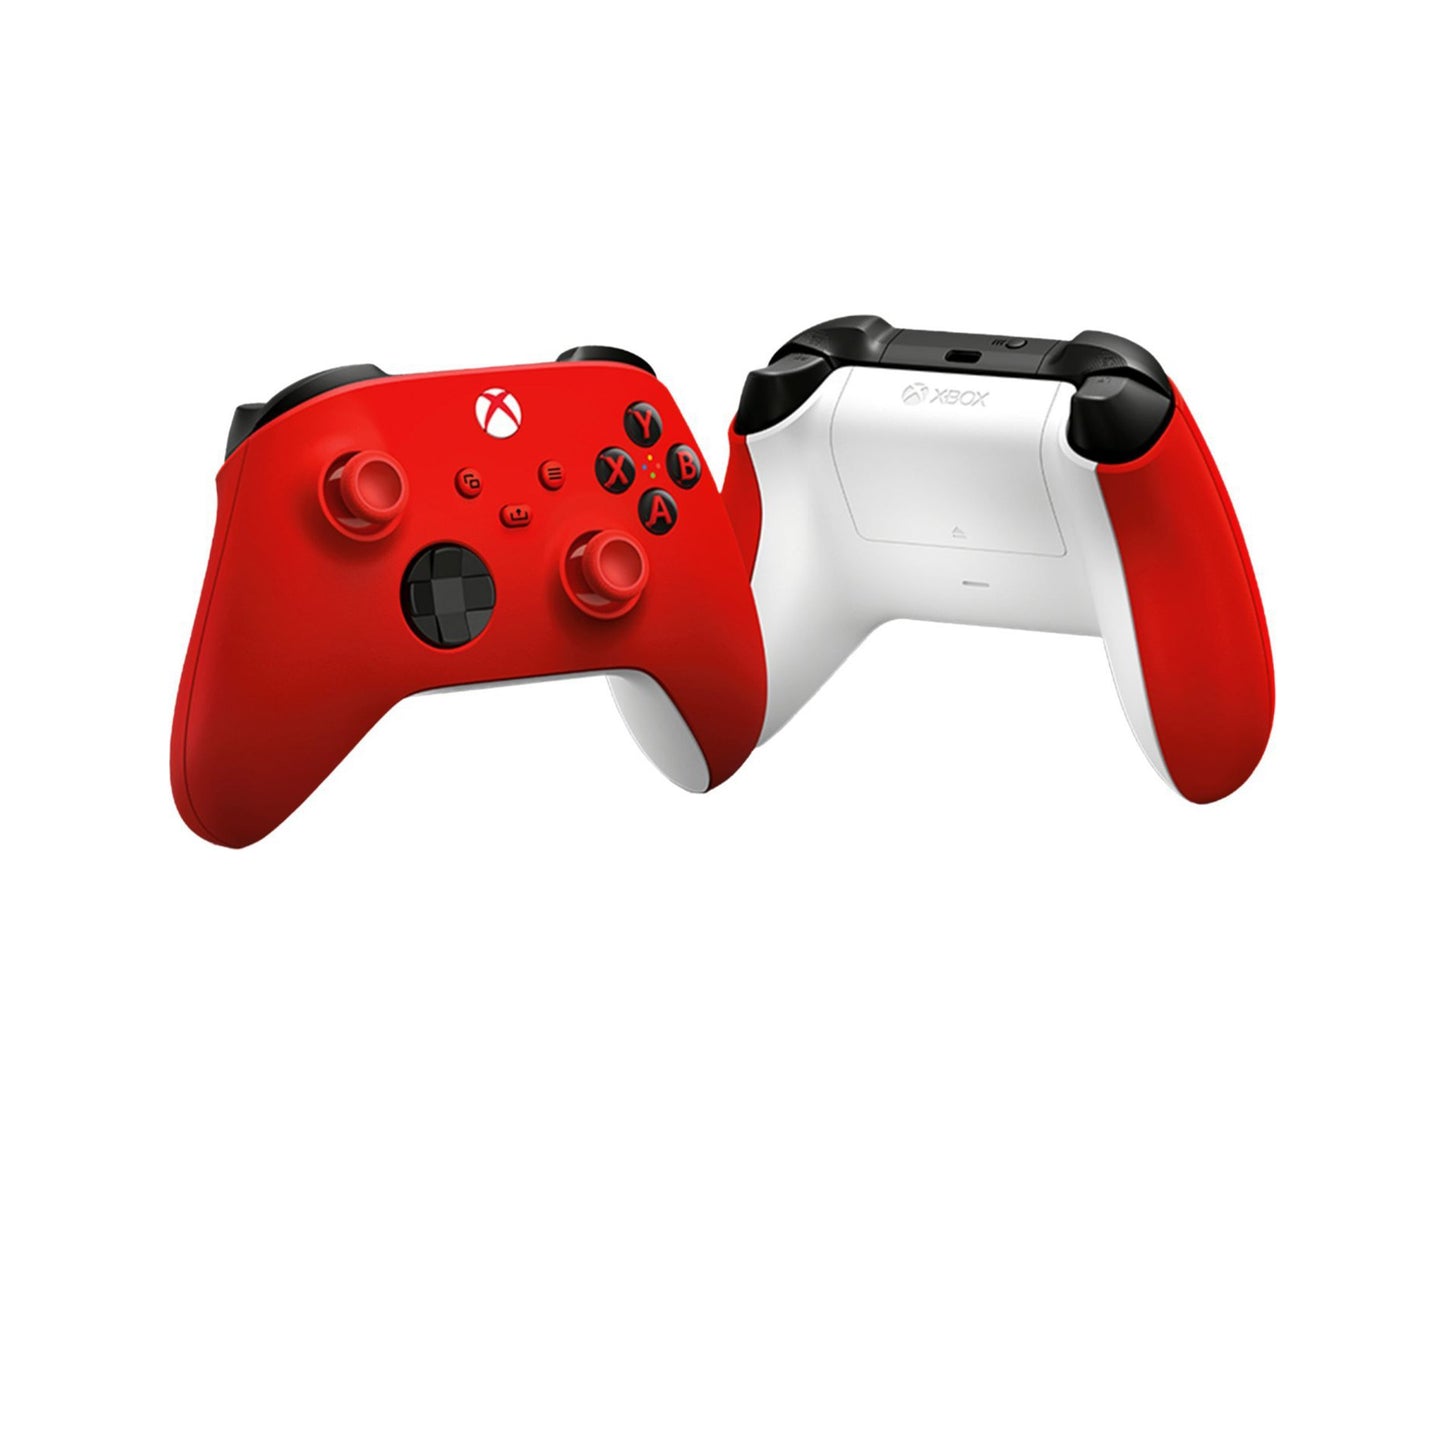 Microsoft - وحدة تحكم Xbox اللاسلكية لأجهزة Xbox Series X وXbox Series S وXbox One وأجهزة Windows - Pulse Red 